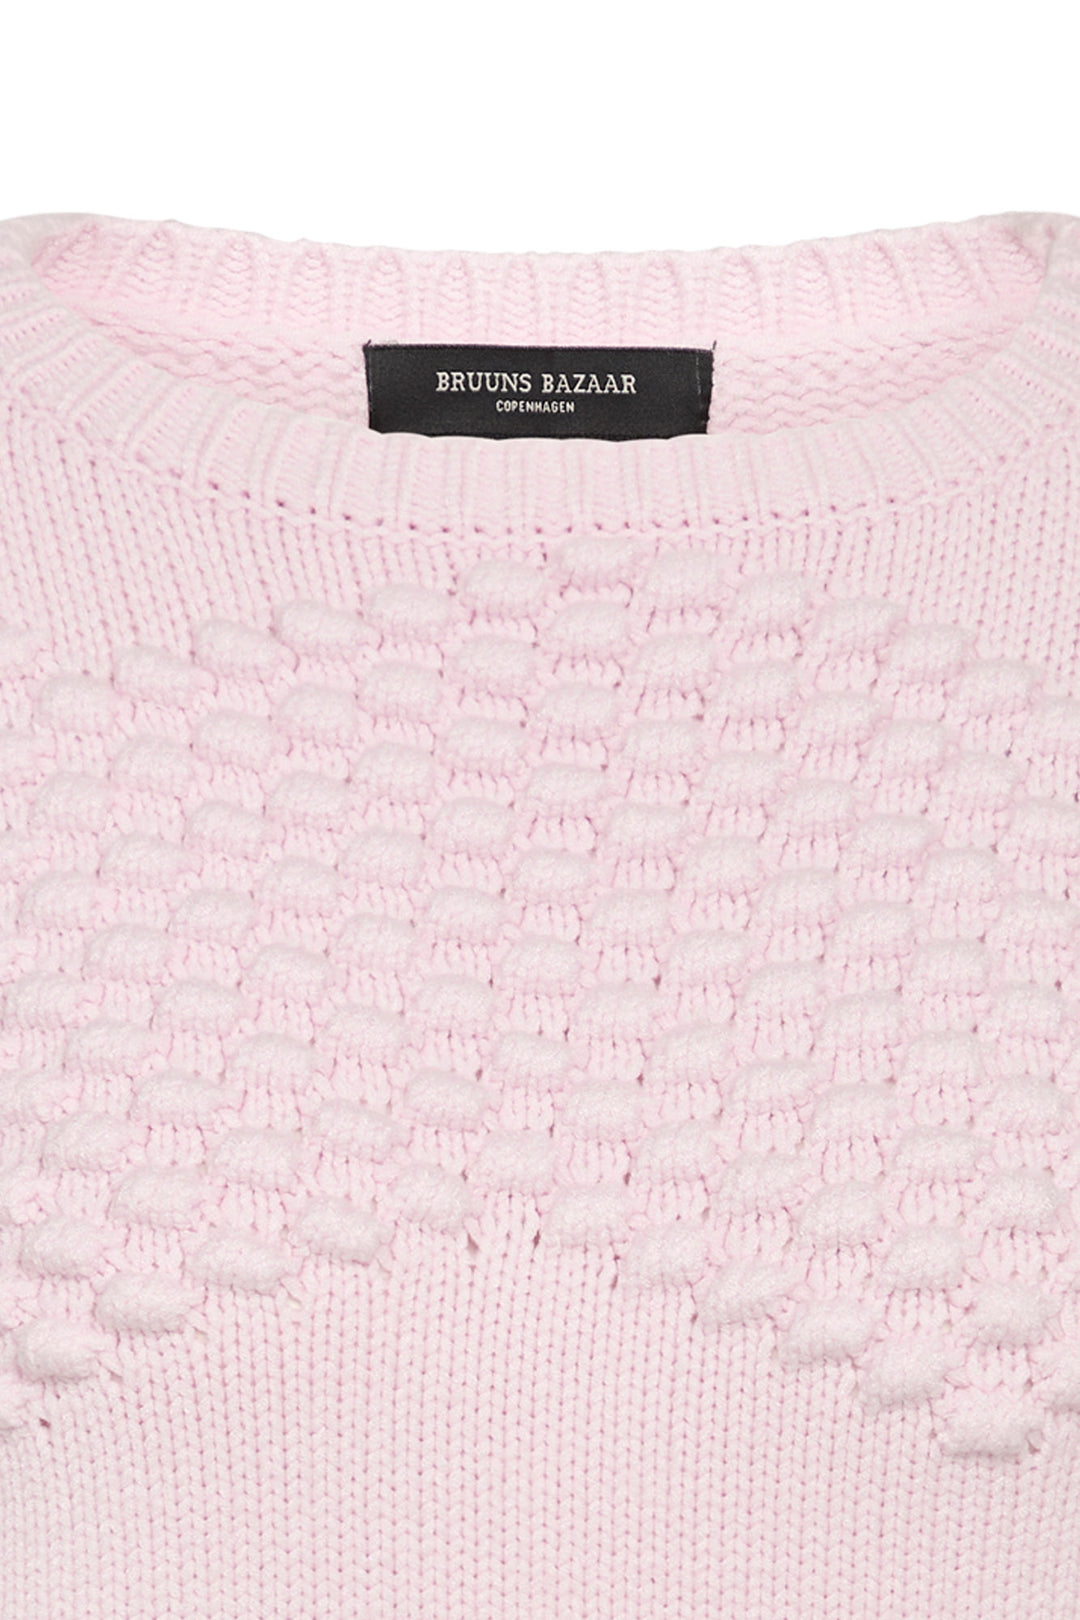 Bruuns Bazaar Women SimonaBBHanny knit Knit Light rosa